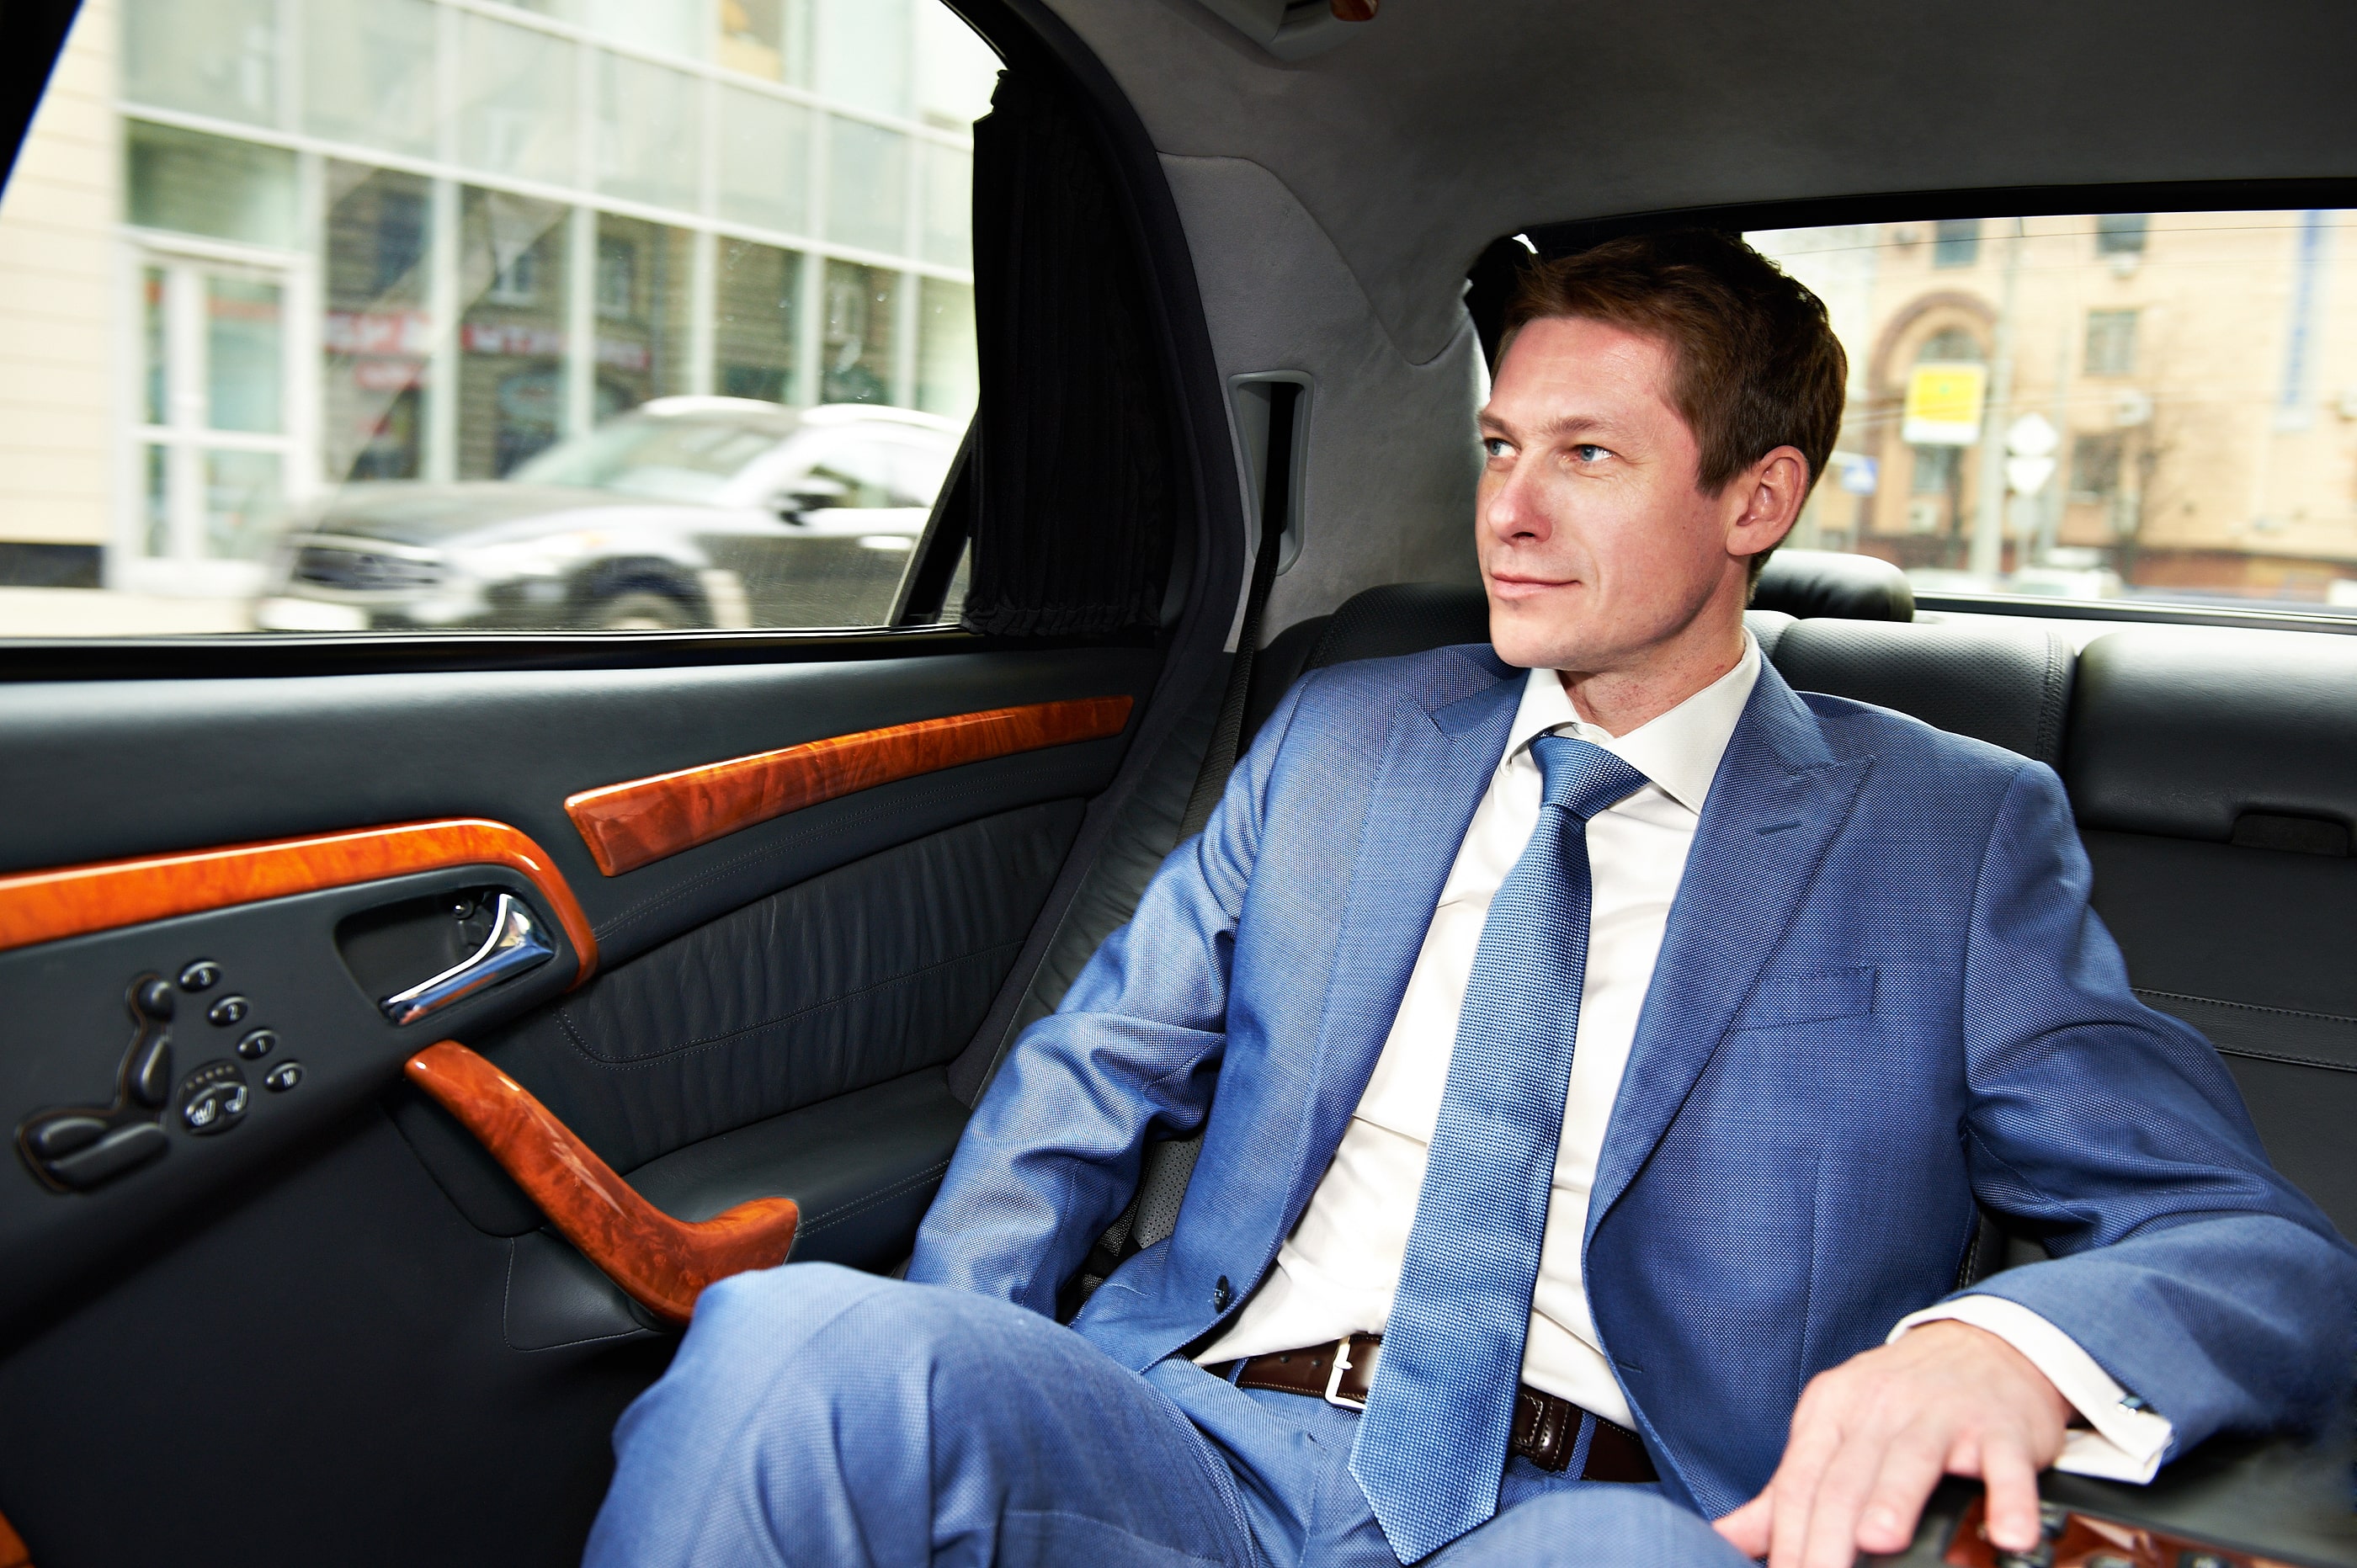 Man wearing blue suit sitting in car